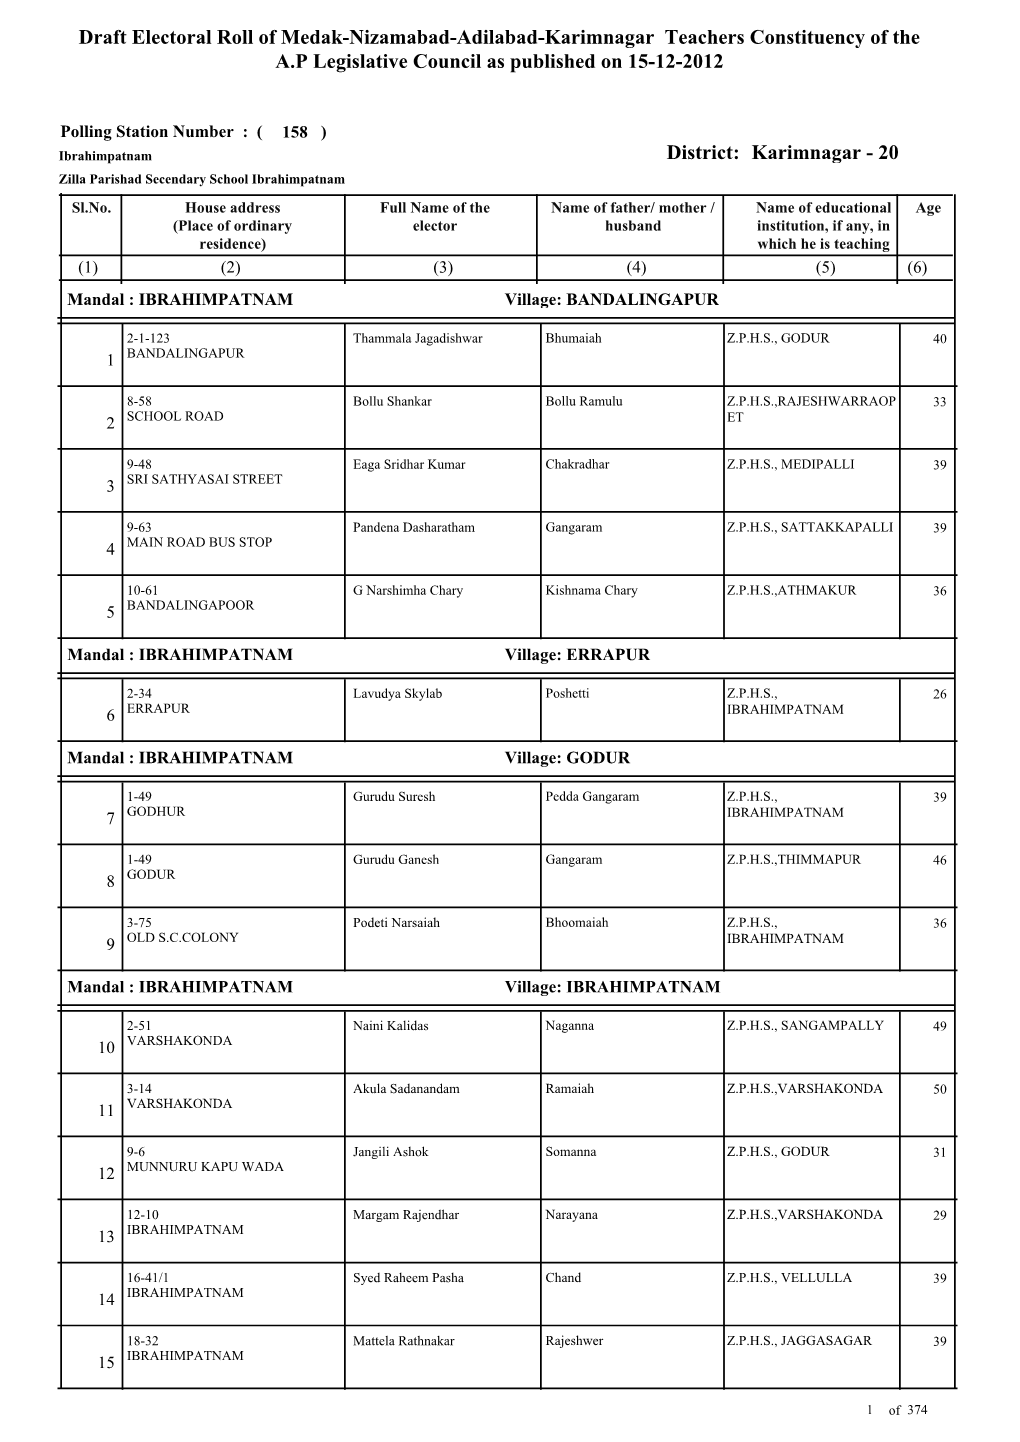 Draft Electoral Roll of Medak-Nizamabad-Adilabad-Karimnagar Teachers Constituency of the A.P Legislative Council As Published on 15-12-2012